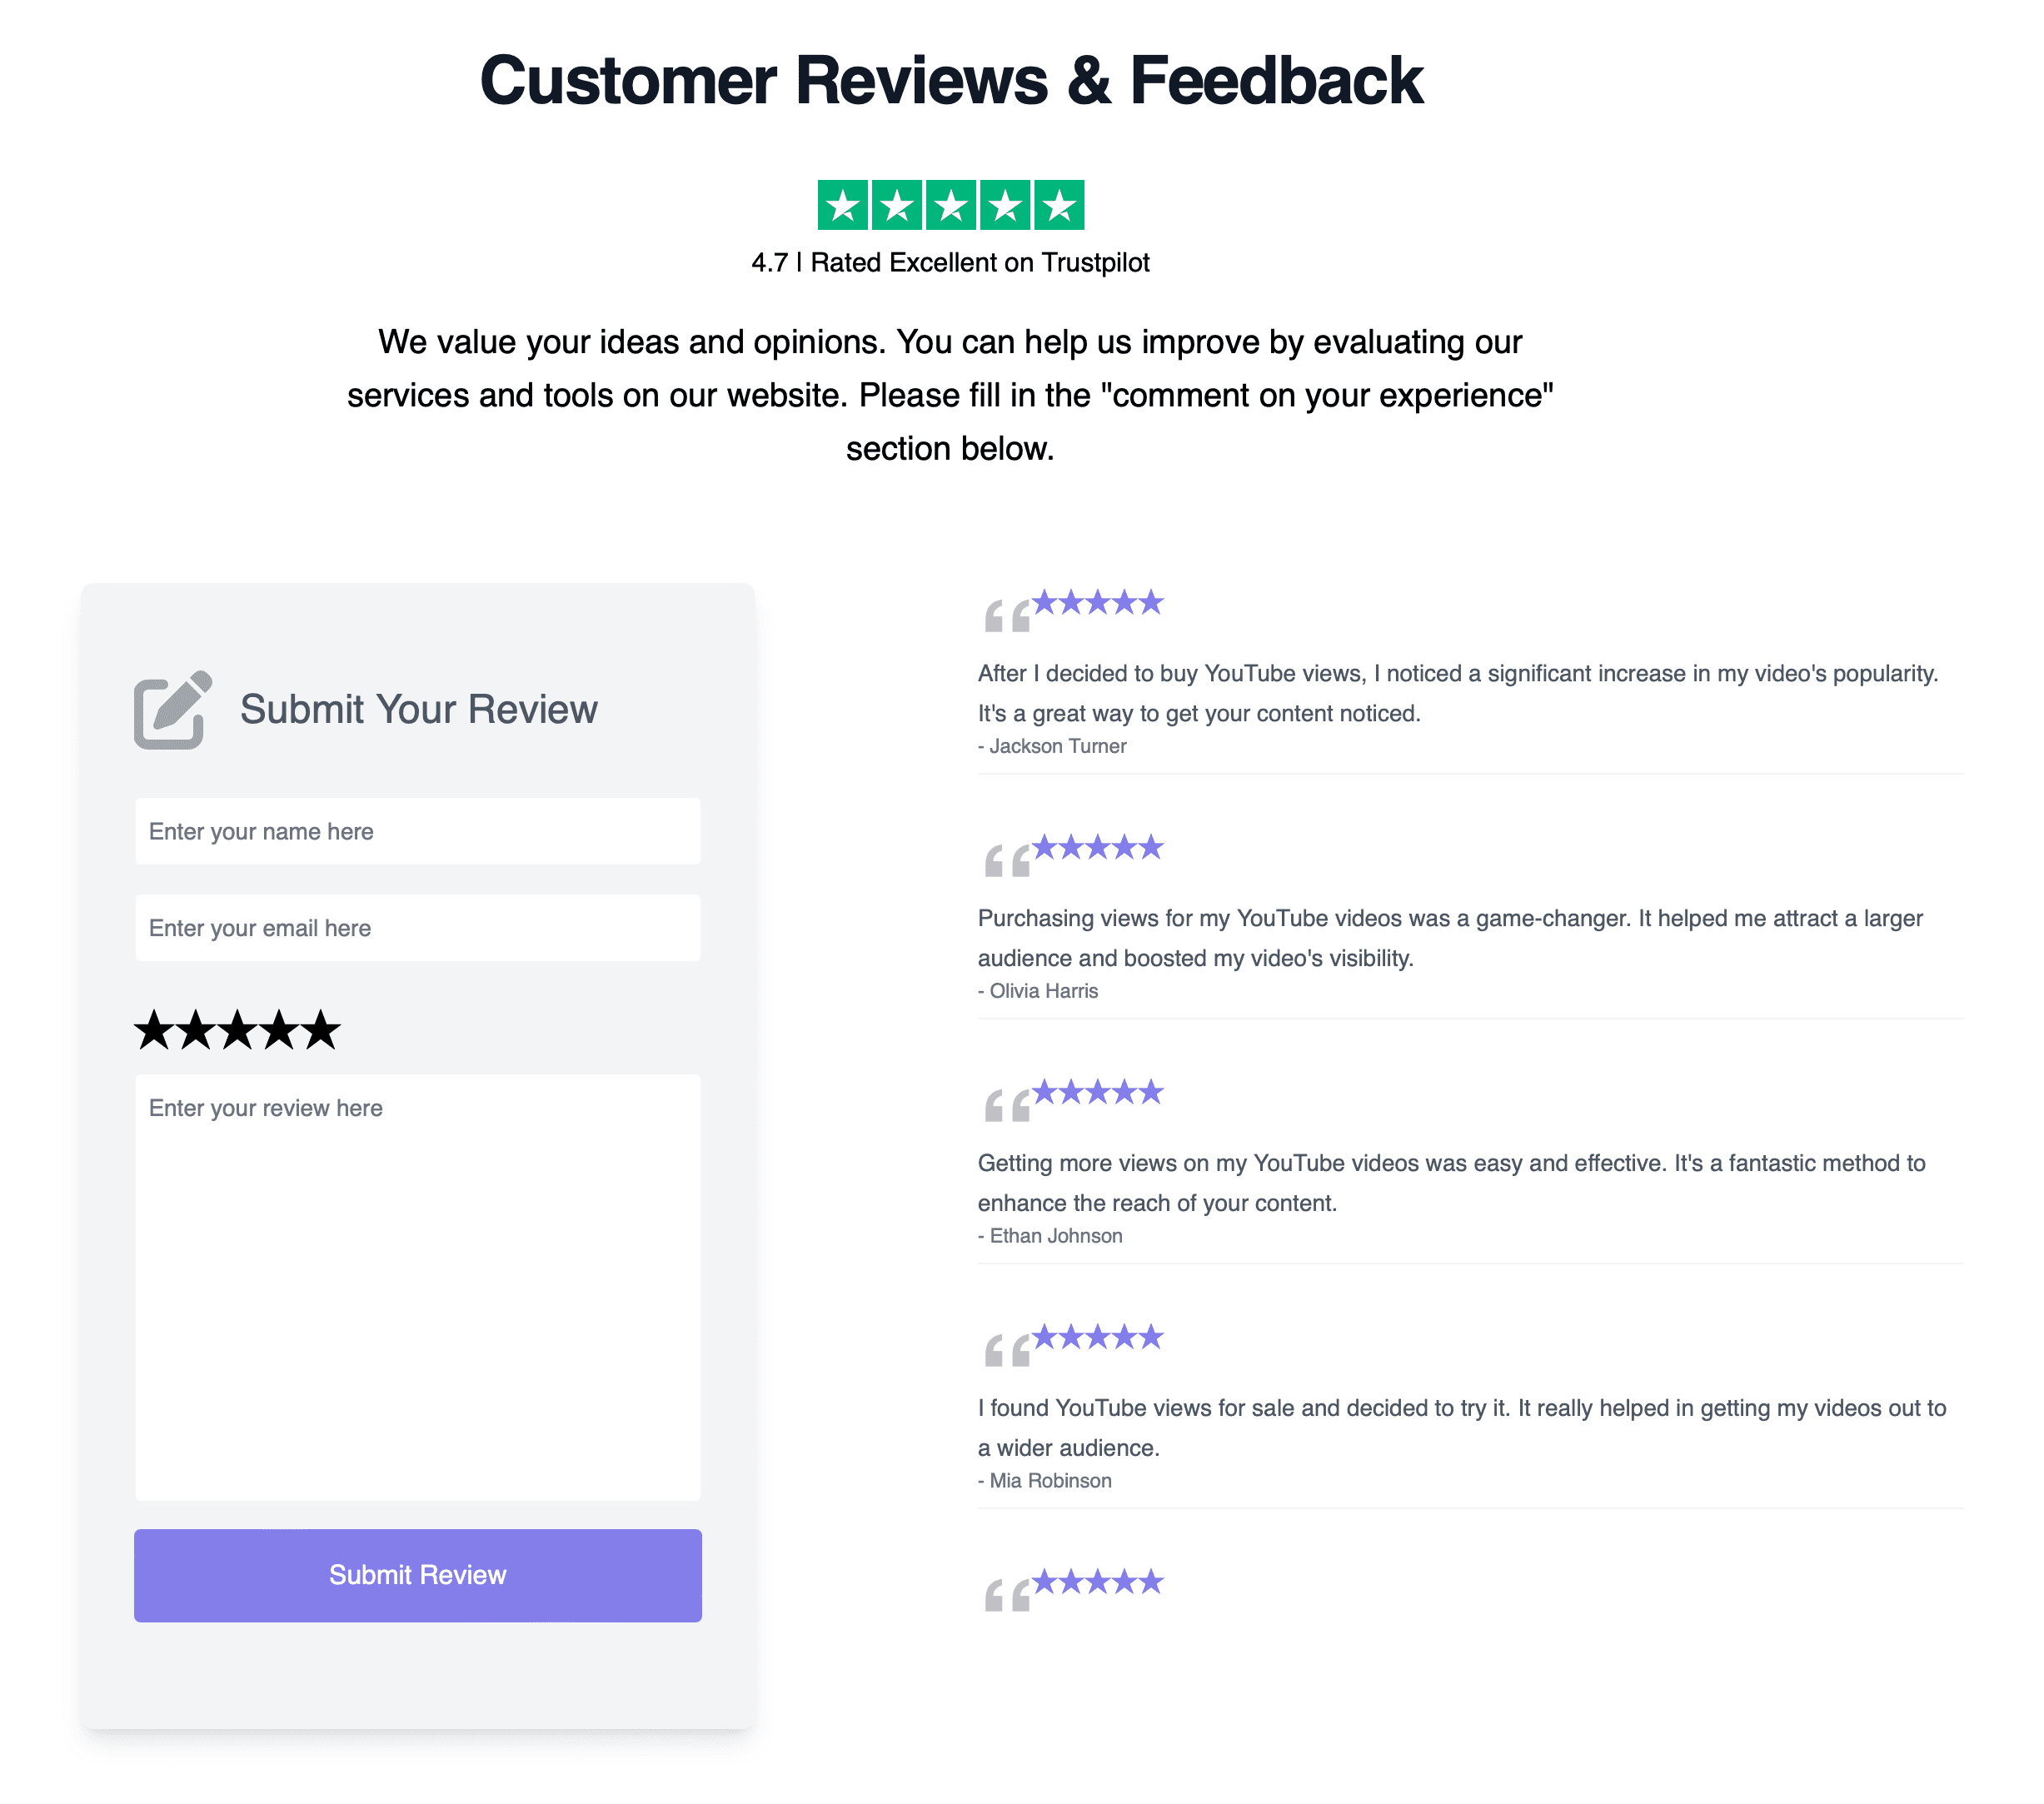 Customer Reviews & Feedback